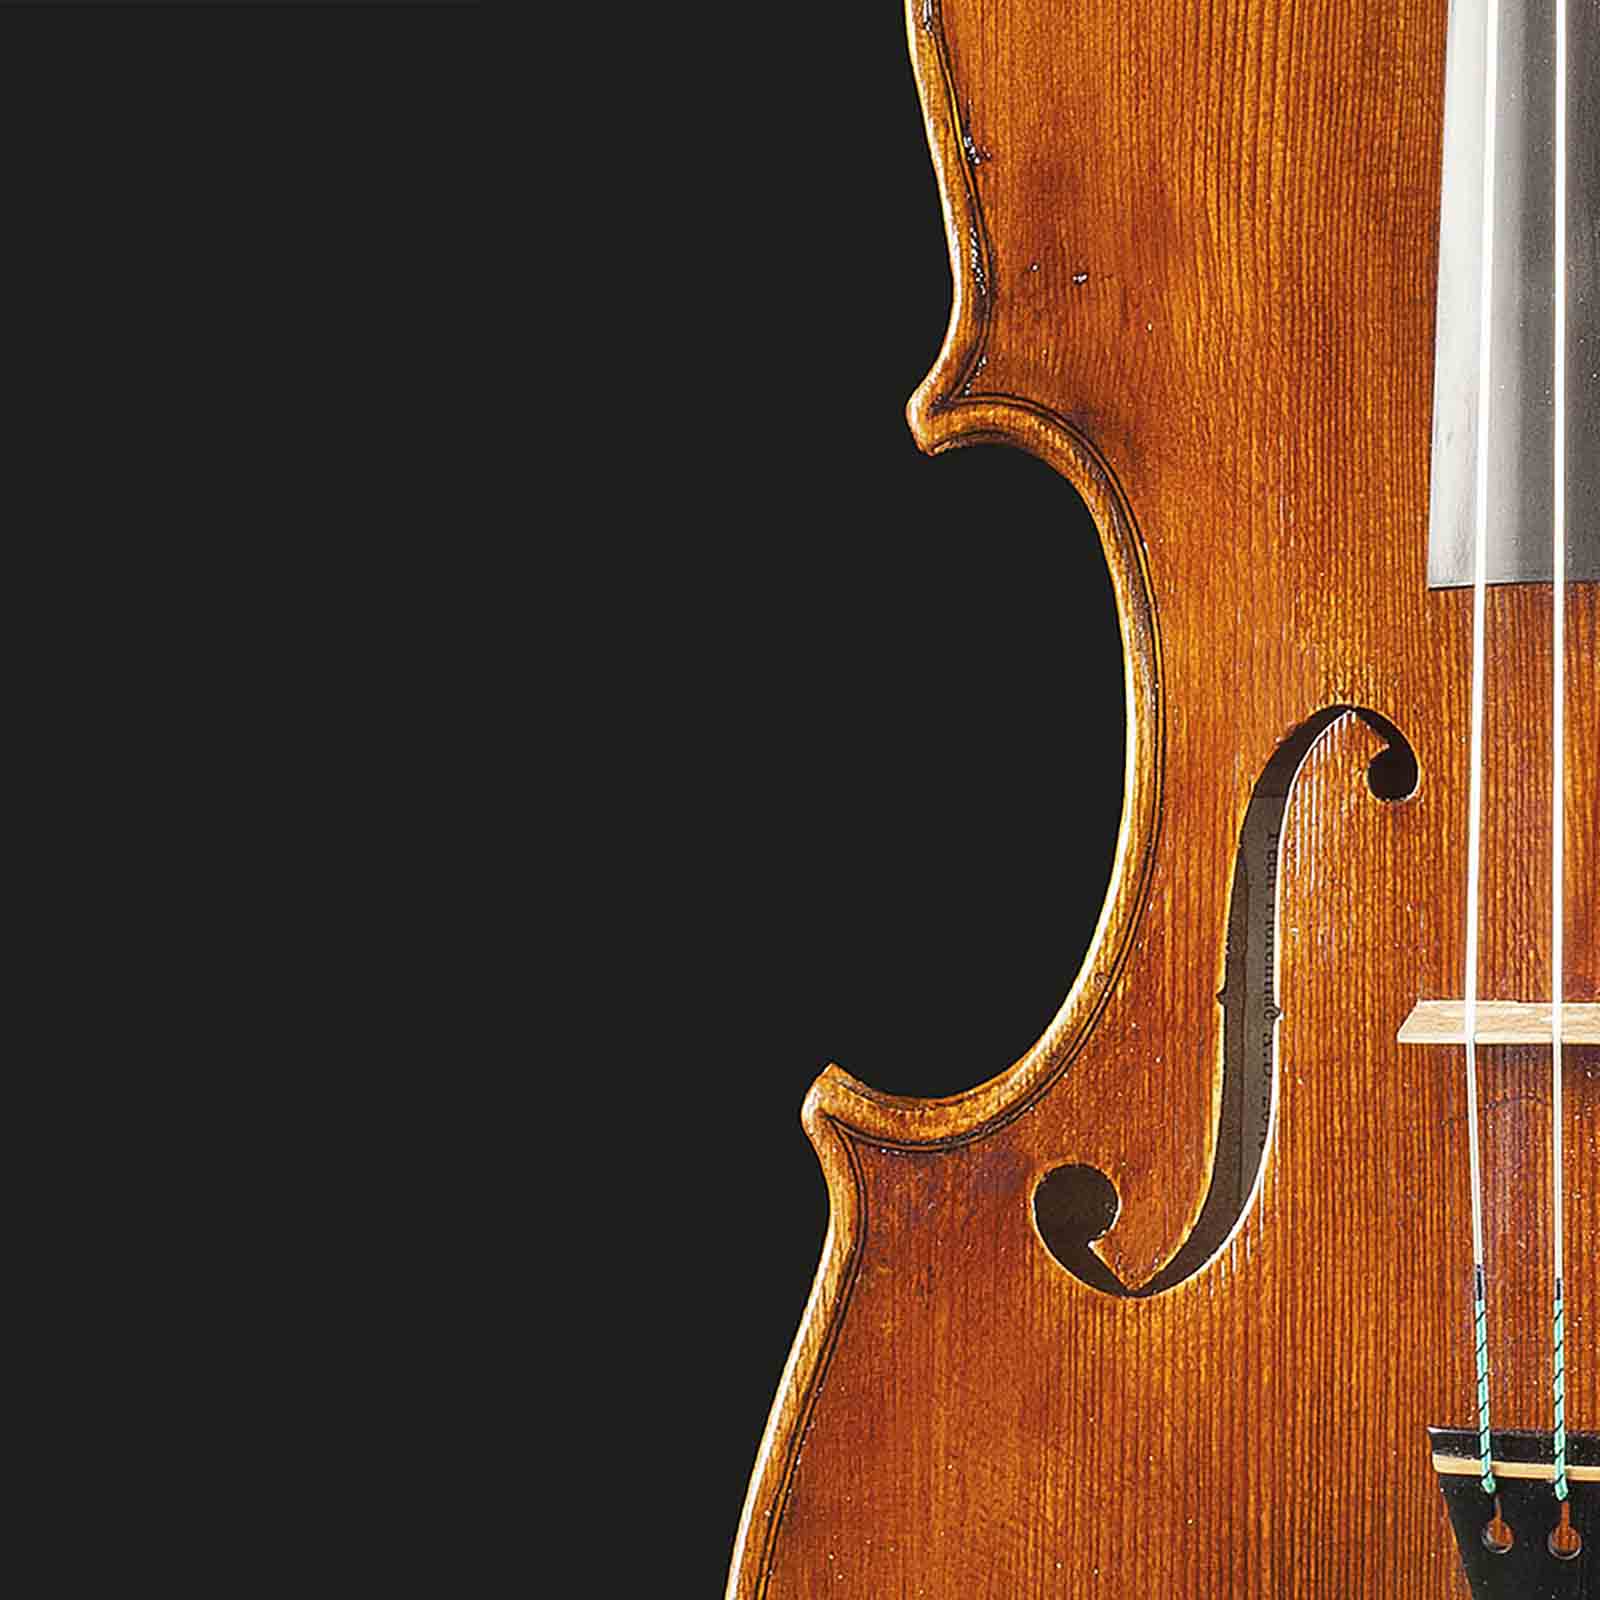 Antonio Stradivari Cremona 1672 “Virgo“ cm 42 - Image 3